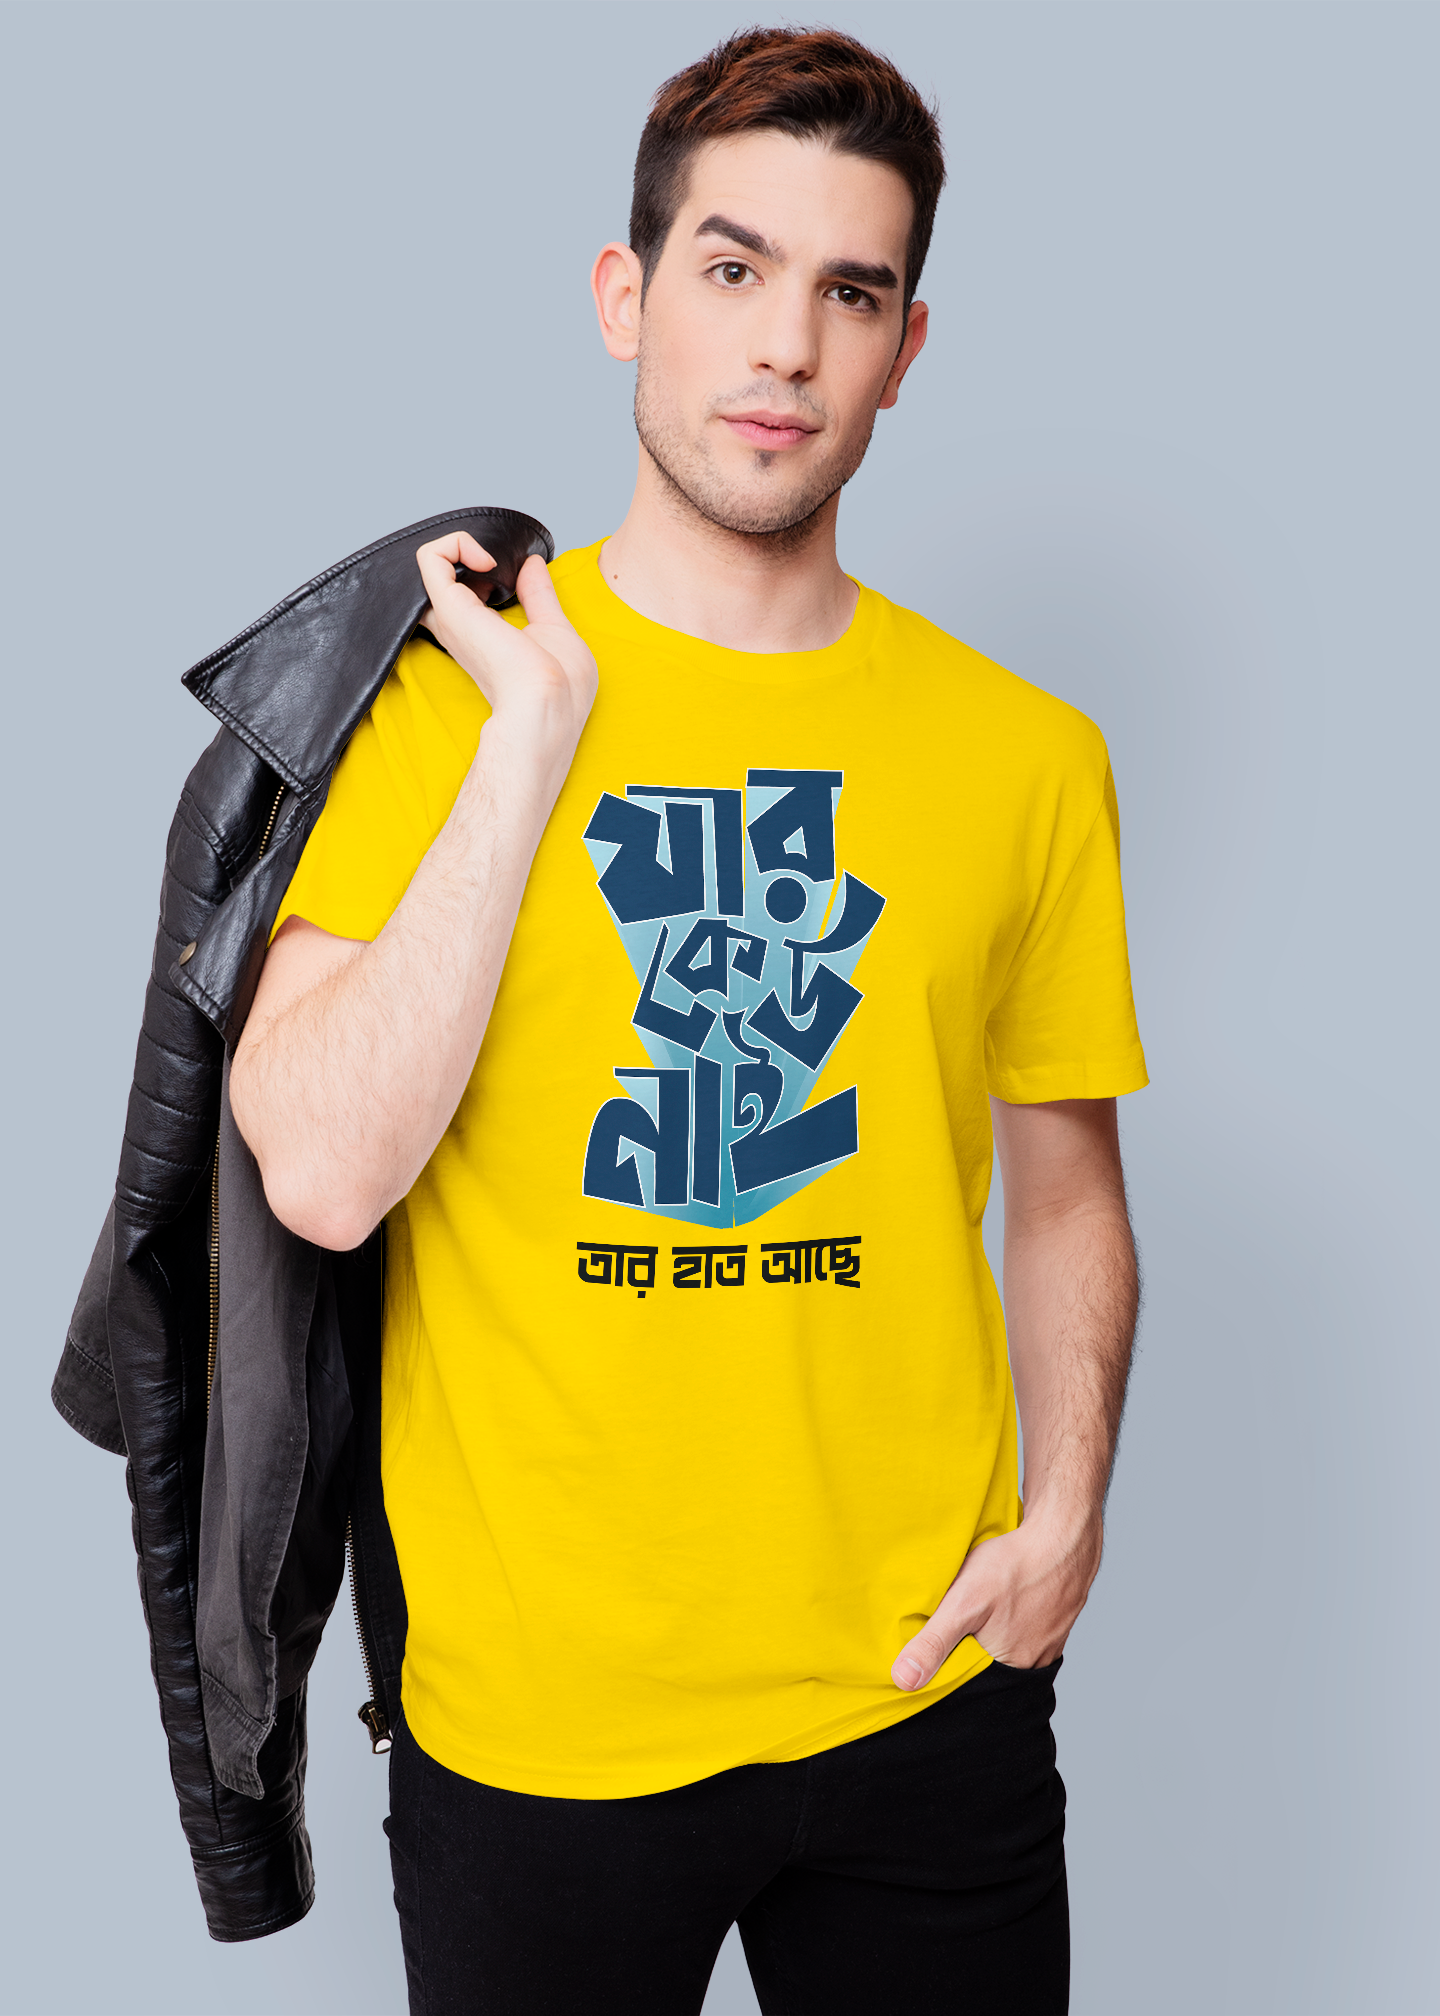 Jar keu nei bengali caligraphy Printed Half Sleeve Premium Cotton T-shirt For Men